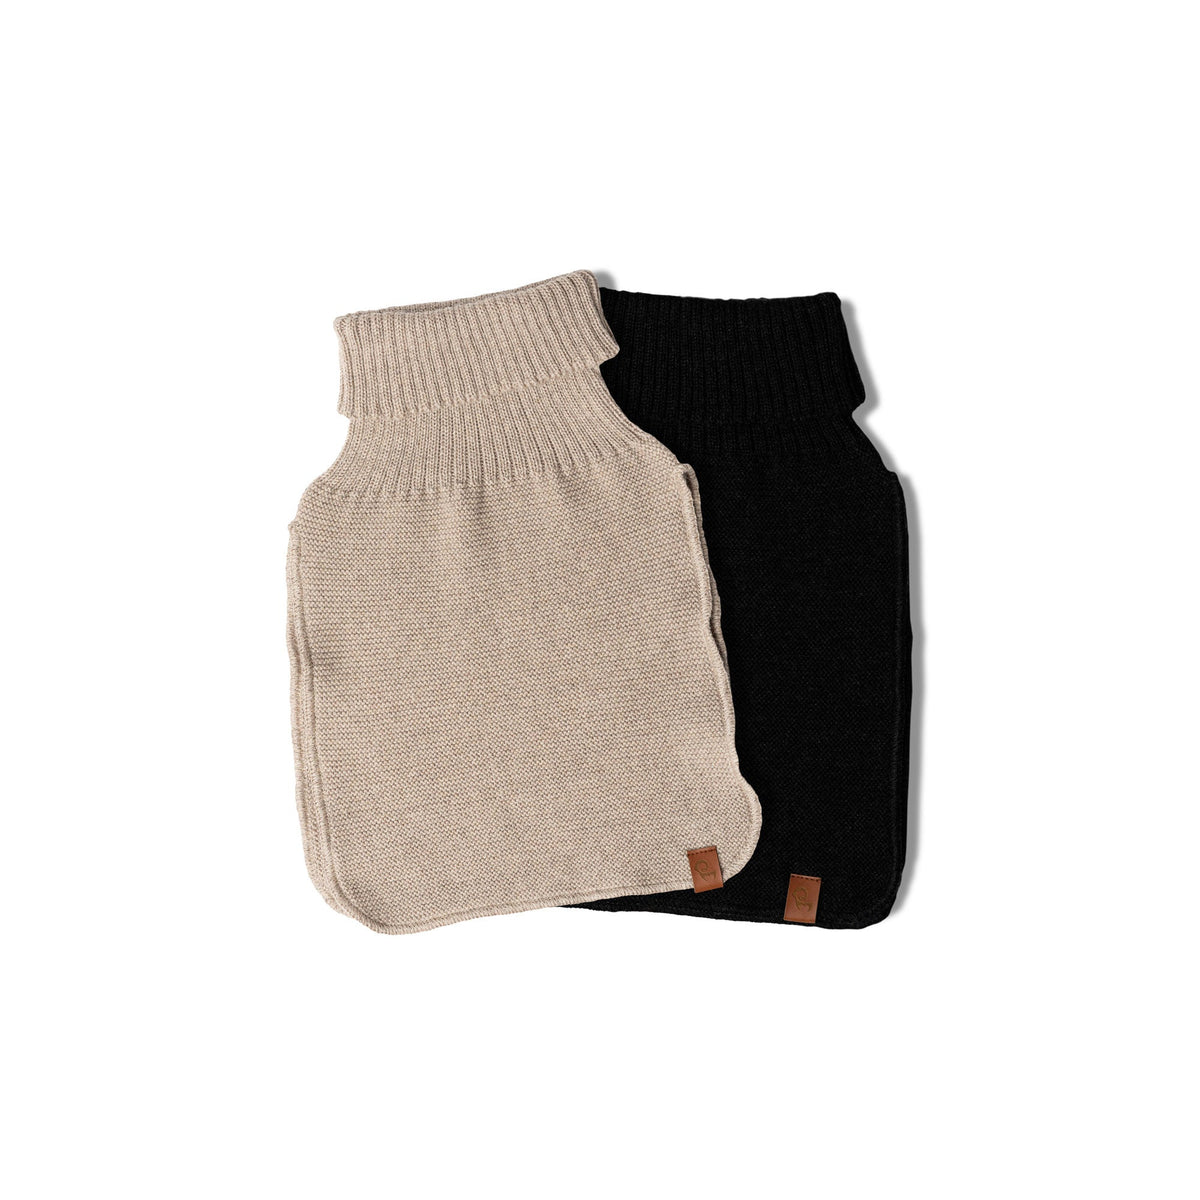 MENIQUE 100% Merino Wool Womens Scarfs 2-Pack Black/Creamy beige